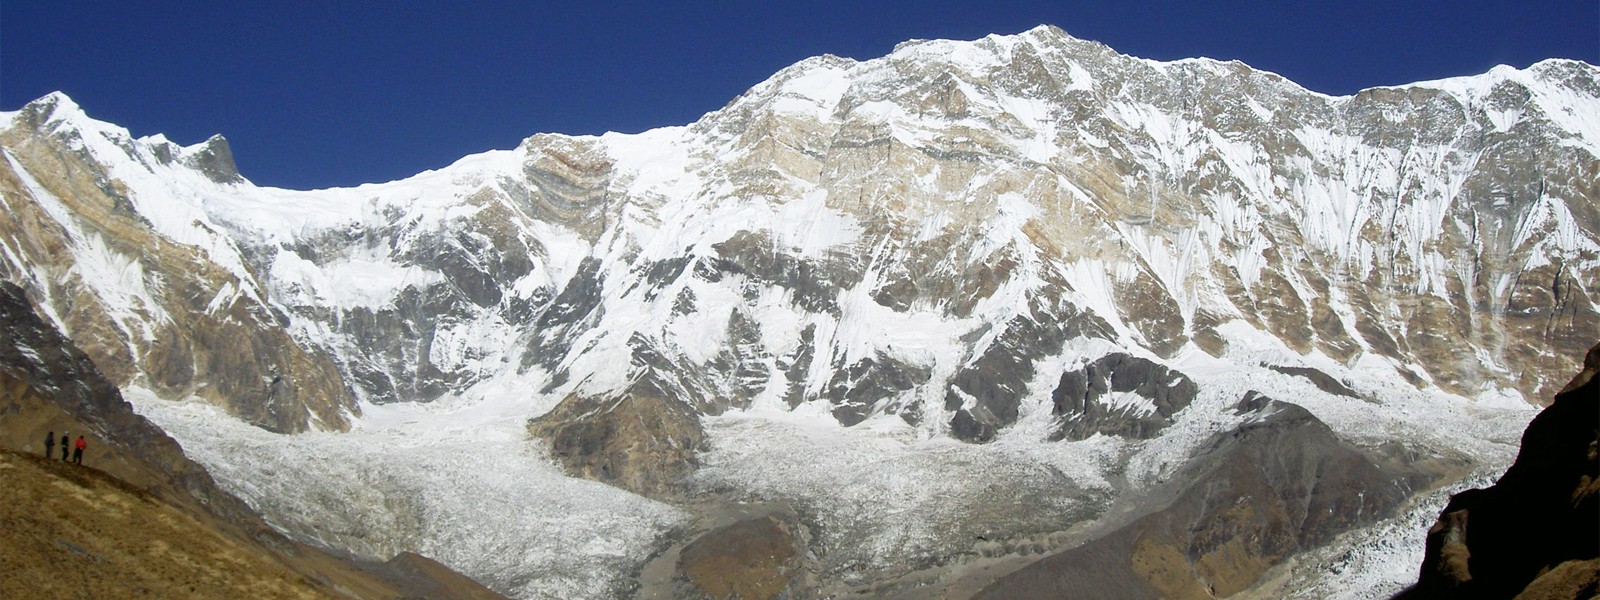 Ghorepani Poon Hill with Annapurna Base Camp Trekking